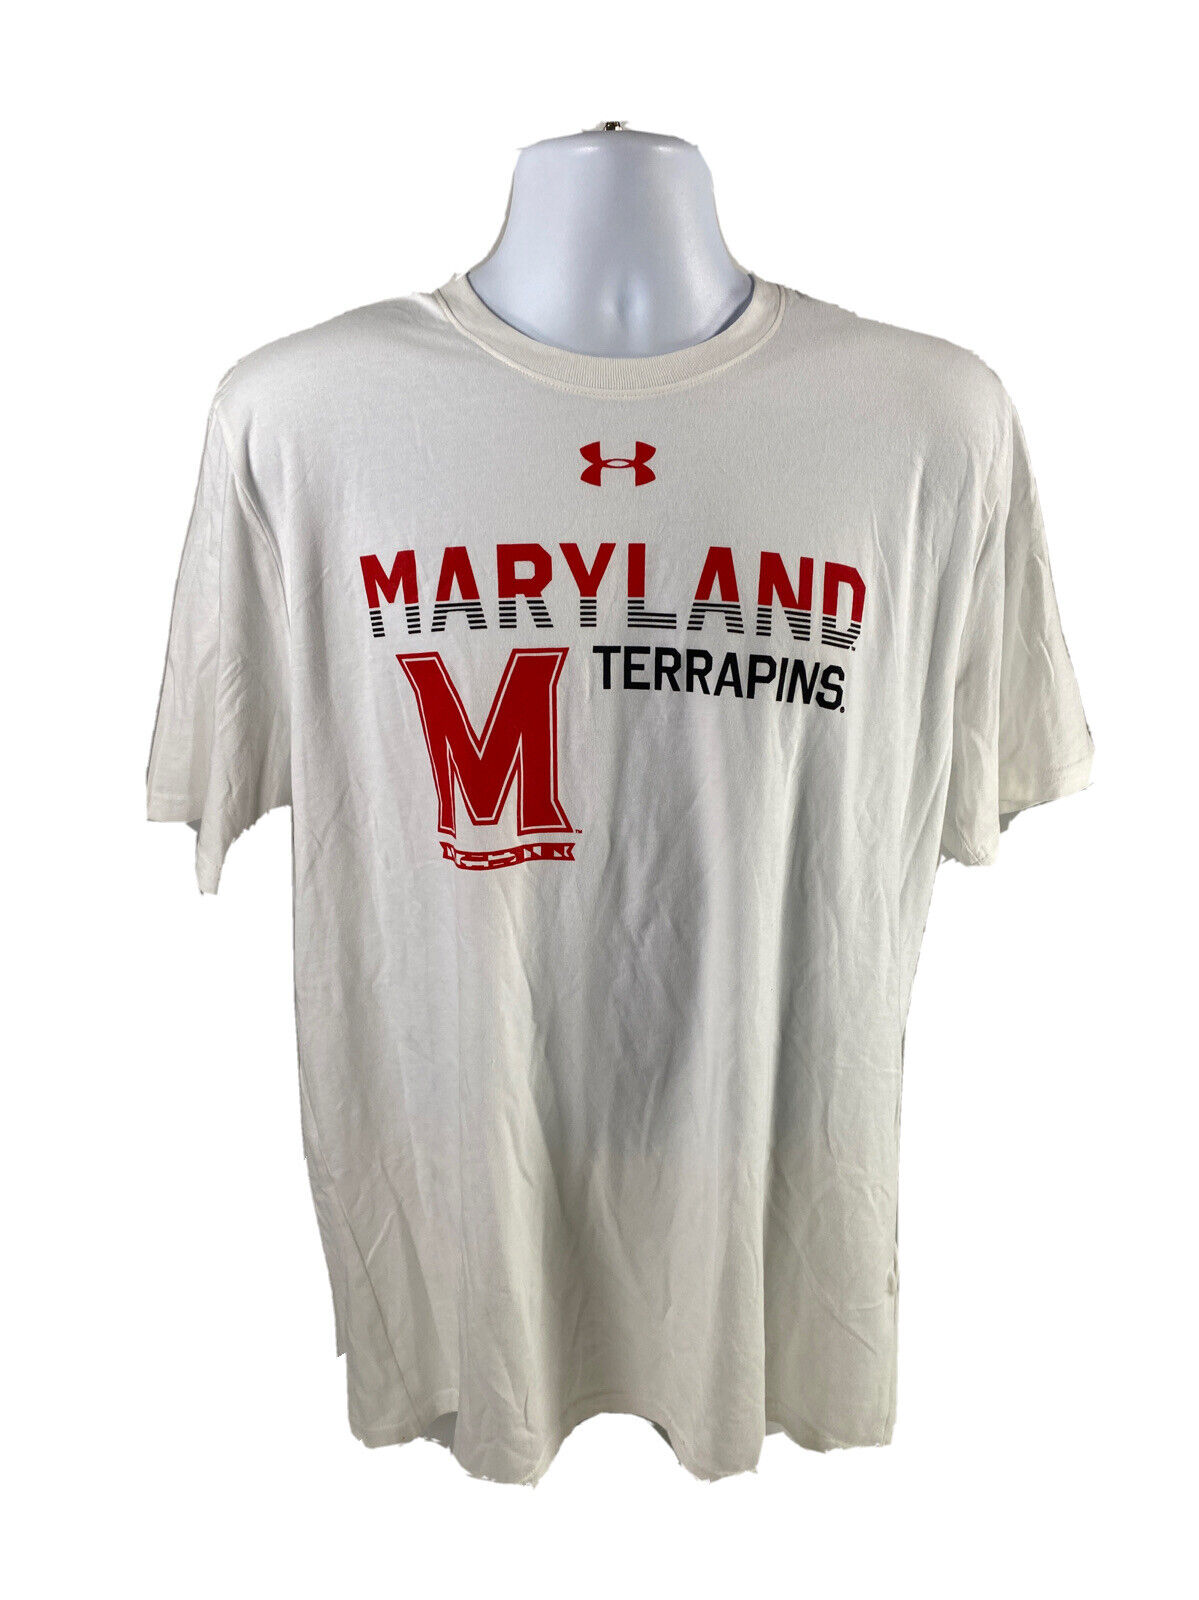 NEW Under Armour Men's White Maryland Terrapins Short Sleeve T- Shirt - M